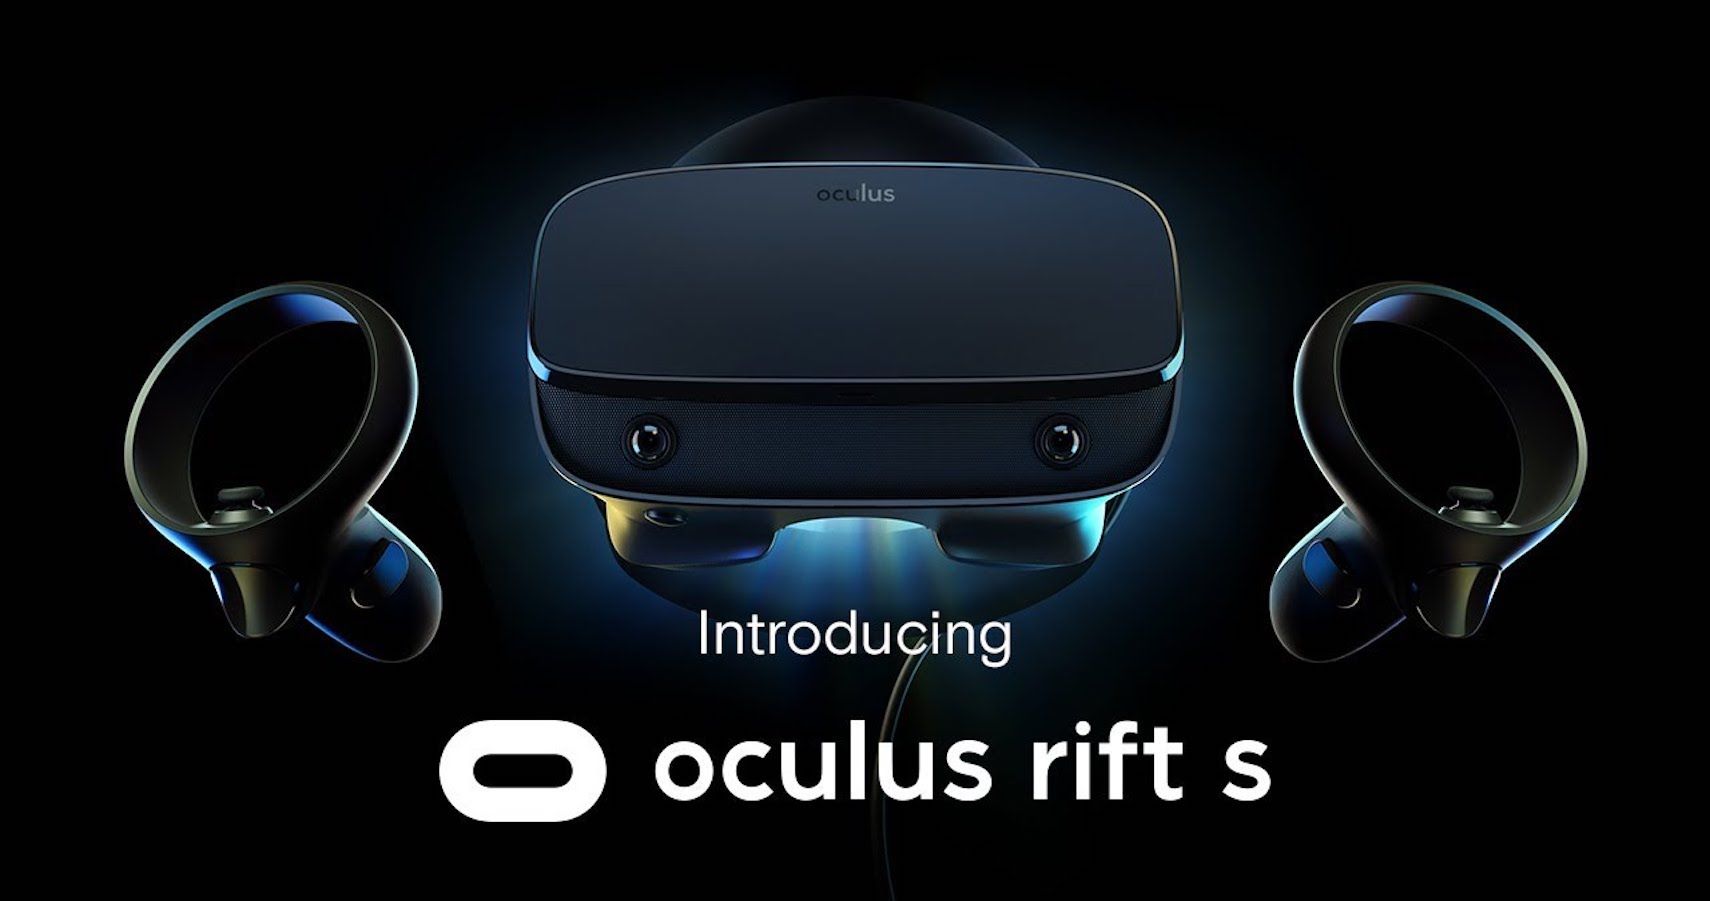 Oculus' New Rift S Promises Higher Resolution And No External